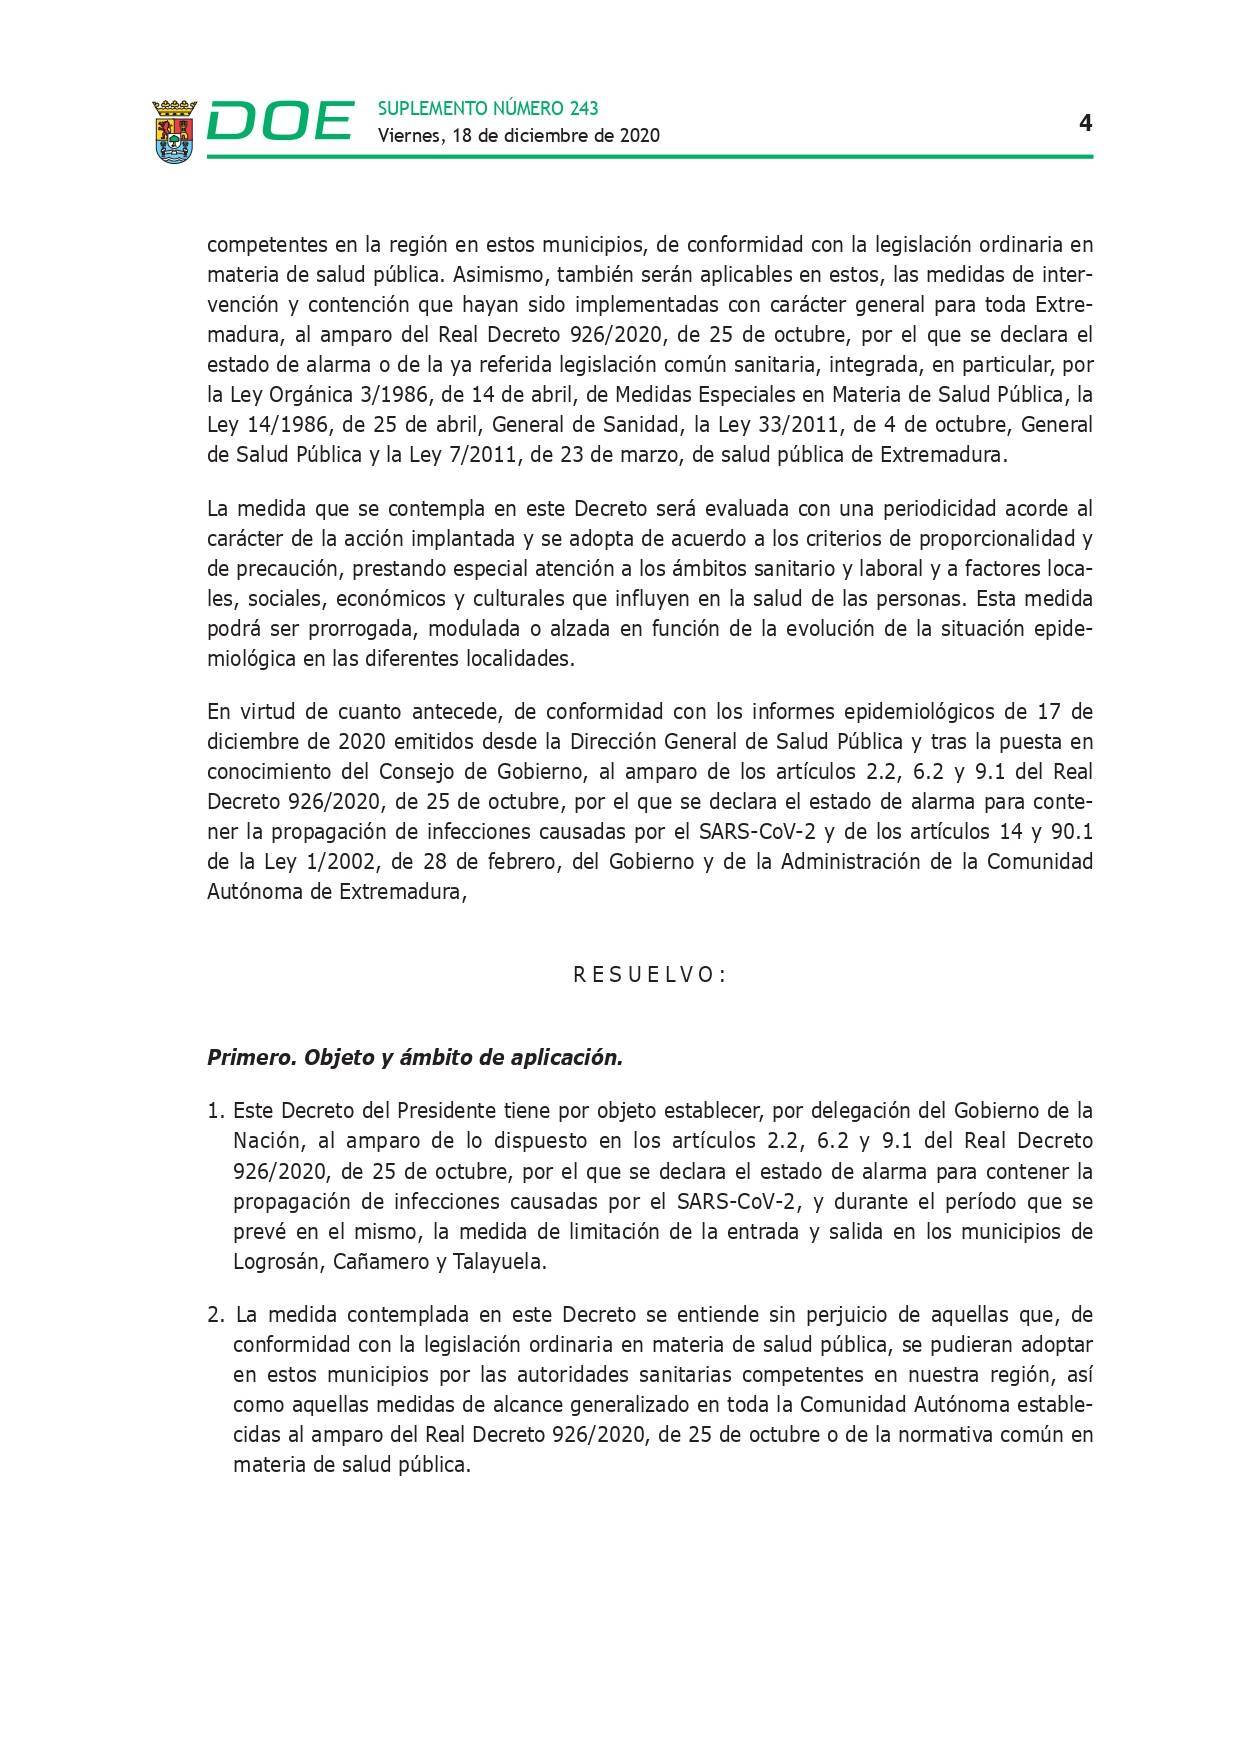 Cierre perimetral por COVID-19 (2020) - Talayuela (Cáceres), Logrosán (Cáceres) y Cañamero (Cáceres) 4